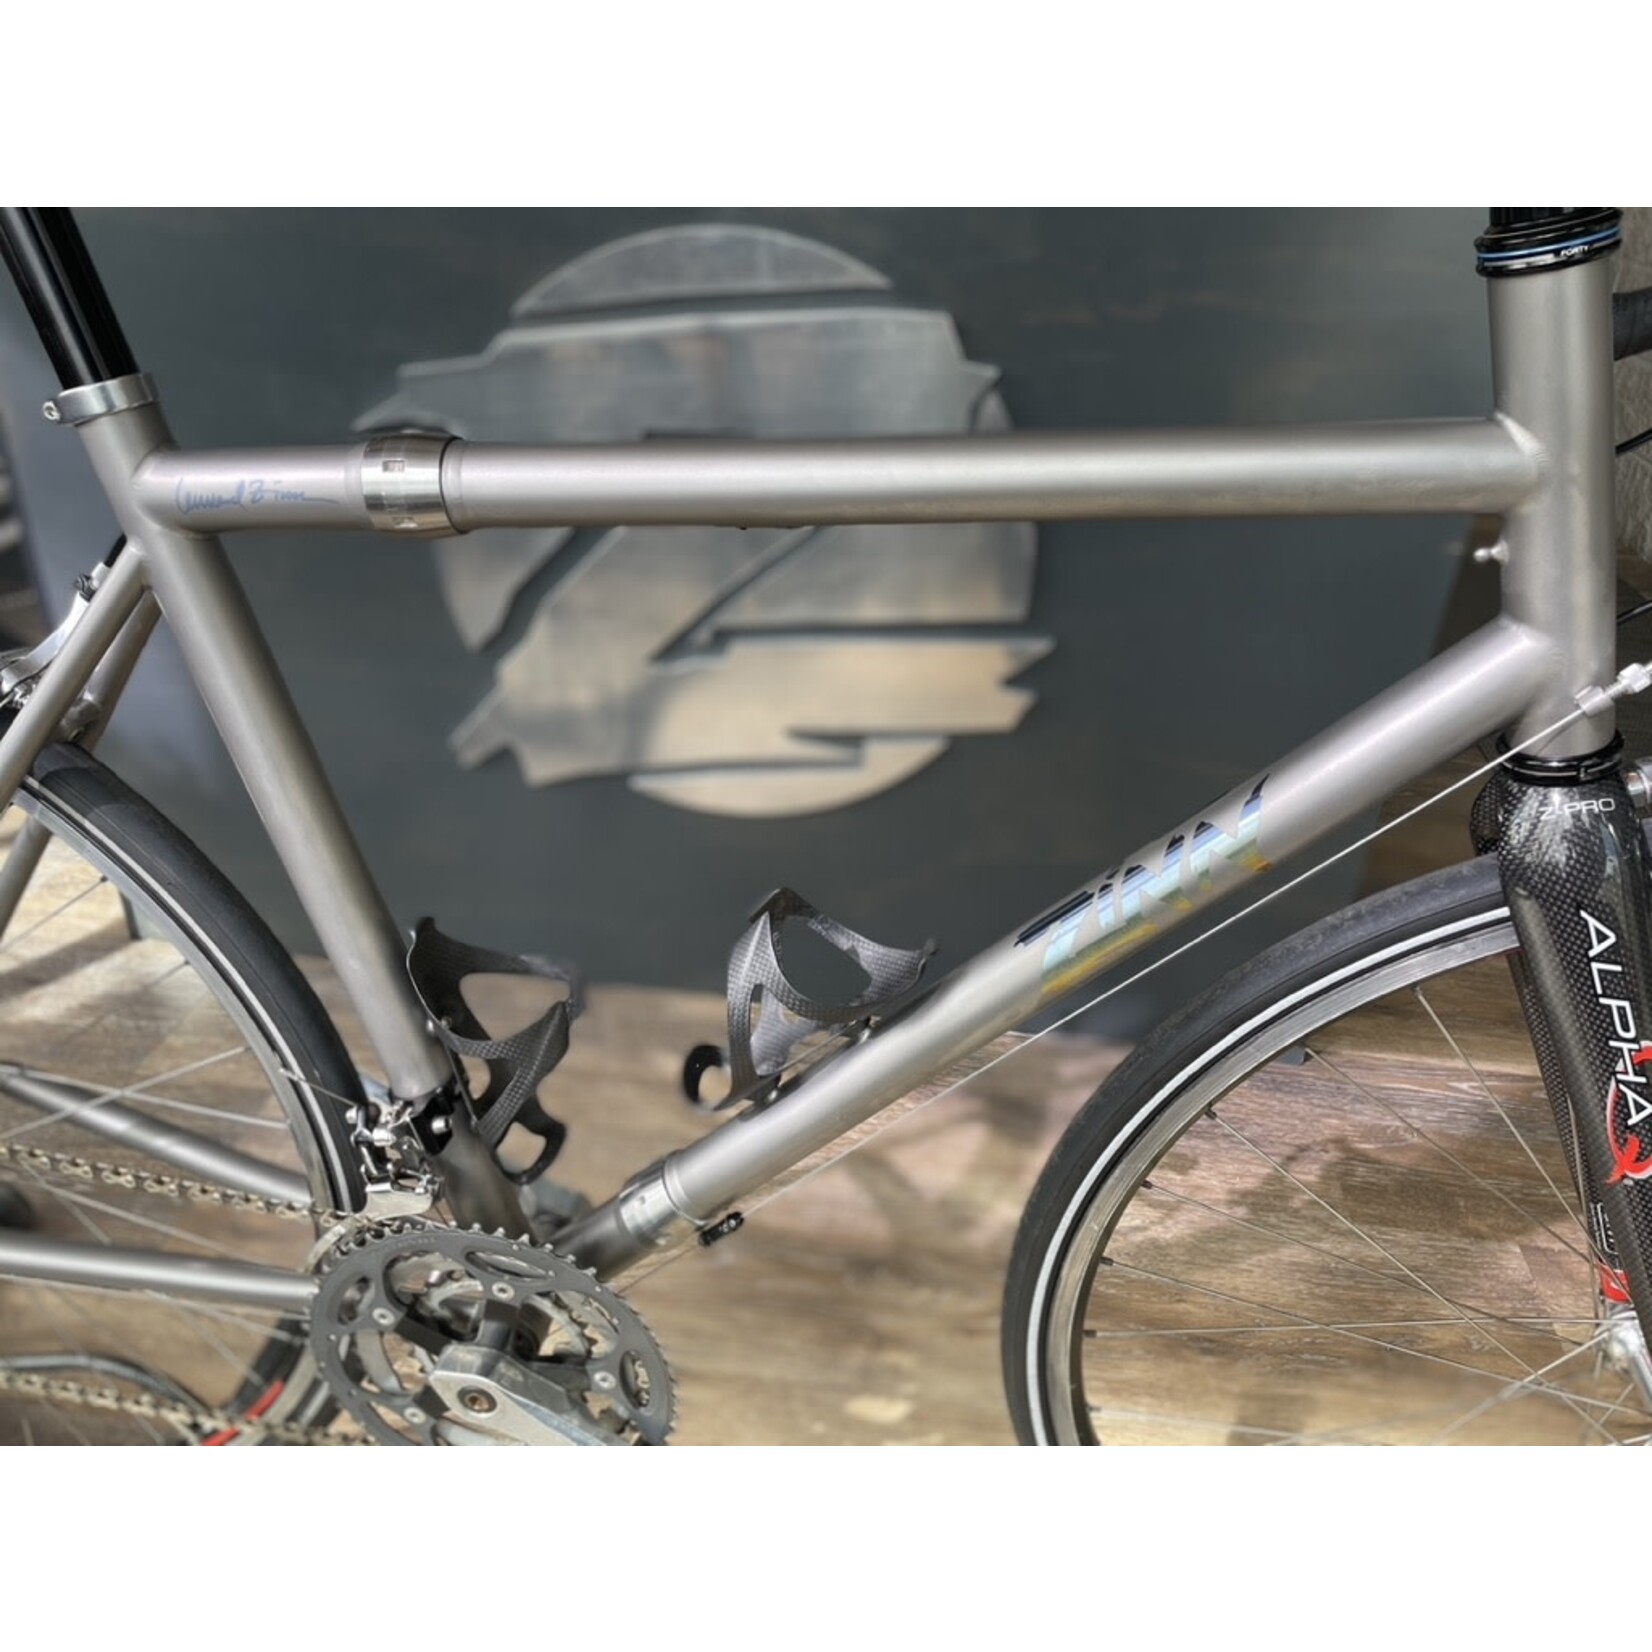 Zinn Custom Titanium Road Travel Bike - Used in great condition for 6'2" - 6'5" rider